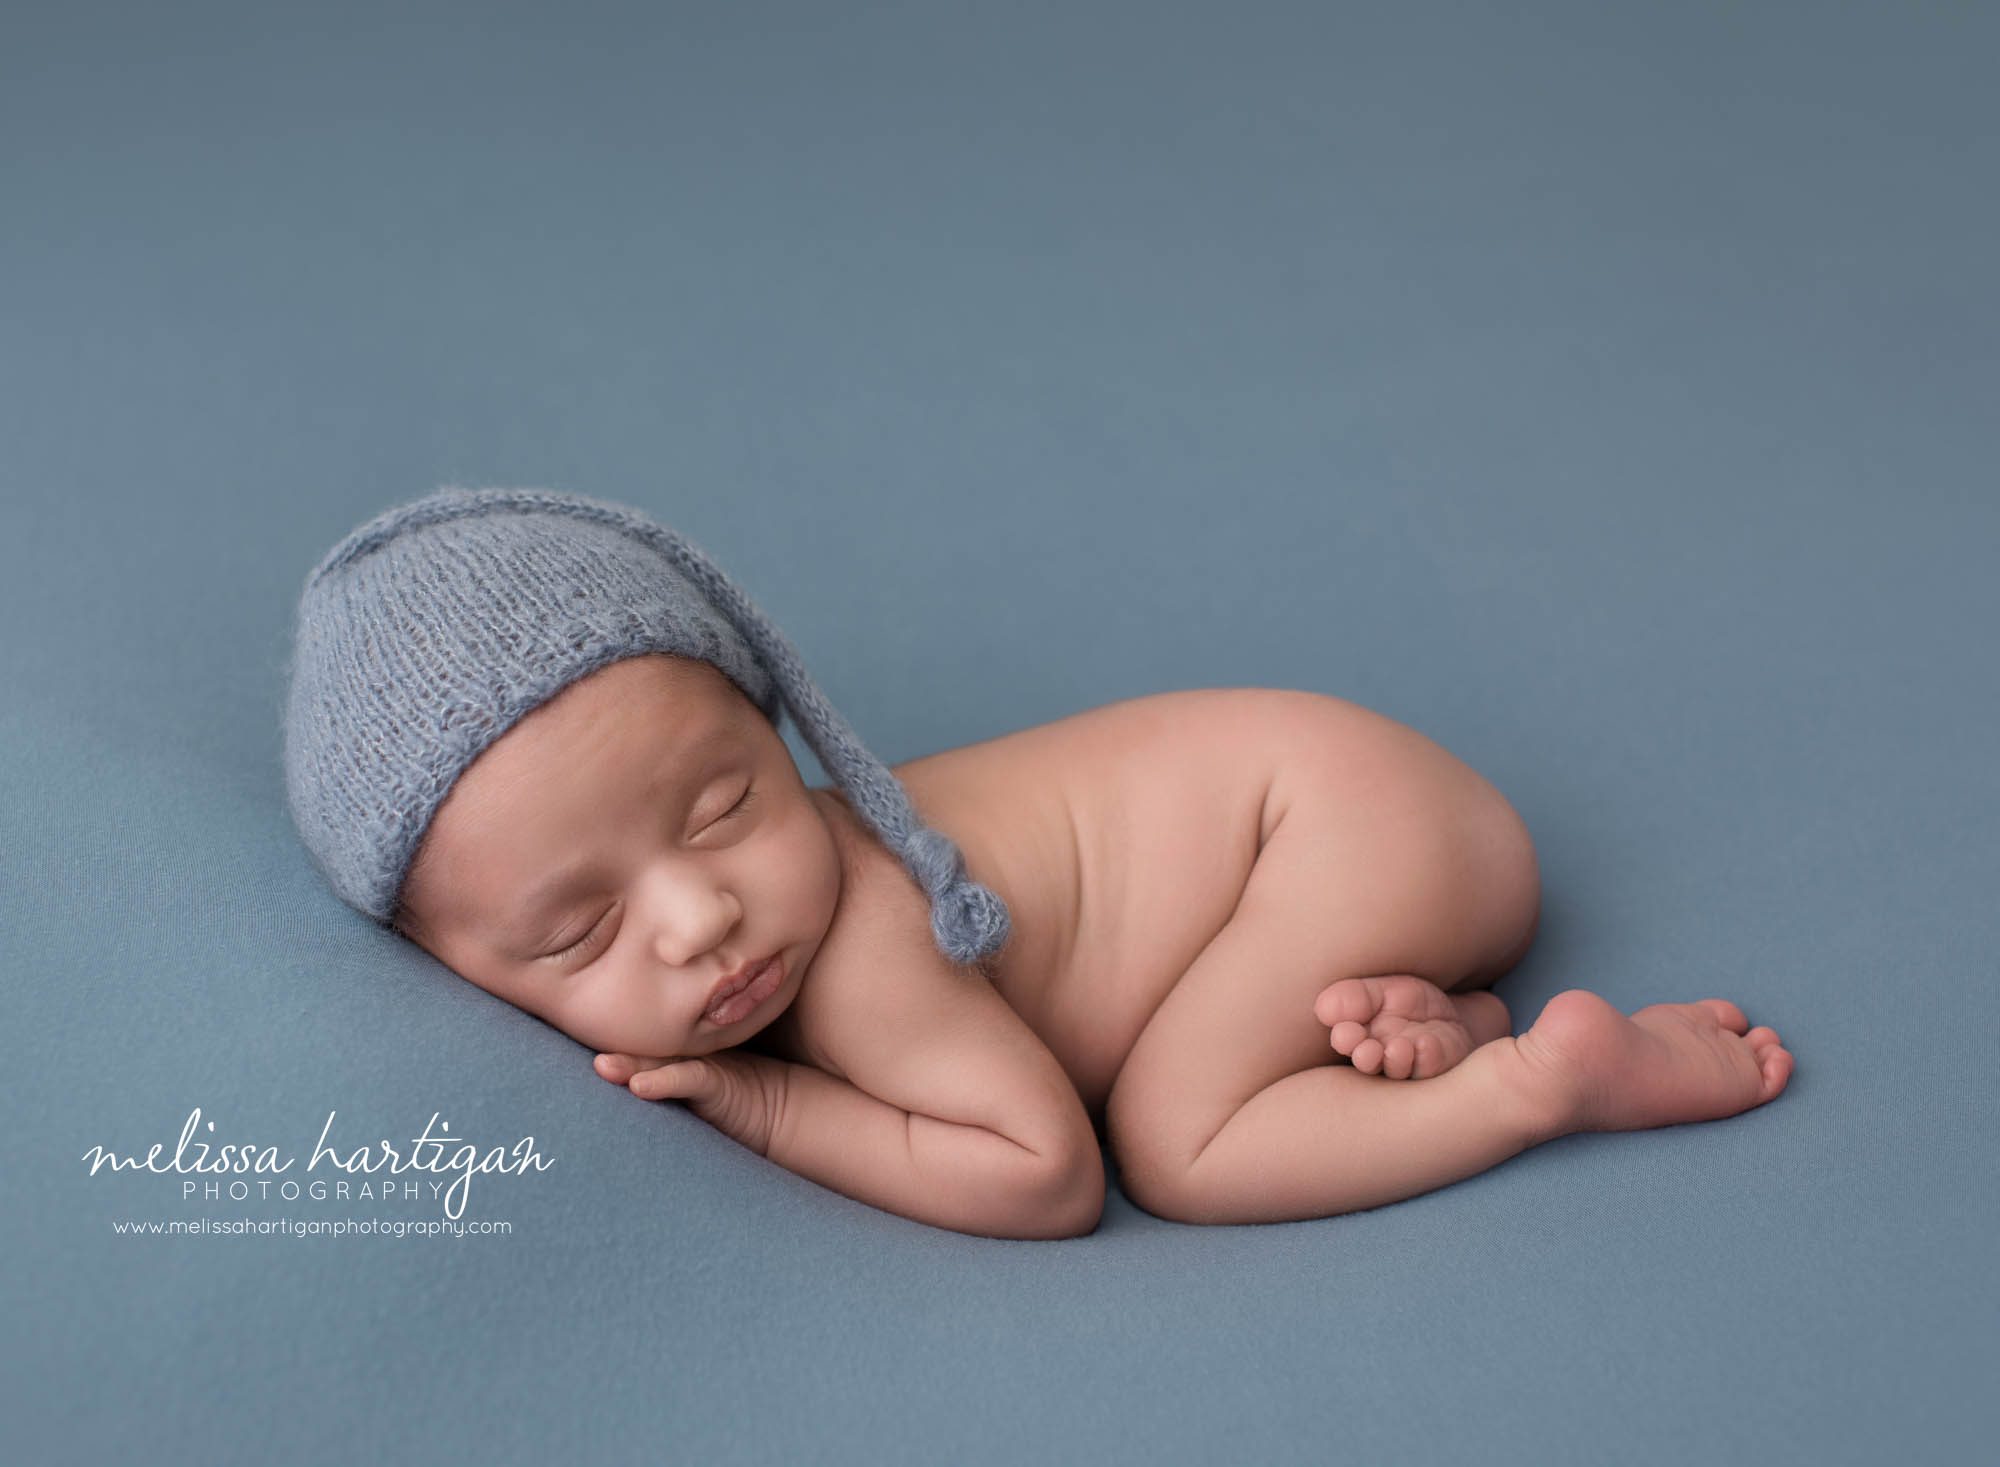 newborn baby boy pose don tummy wearing blue knitted sleepy cap New haven CT newborn photography